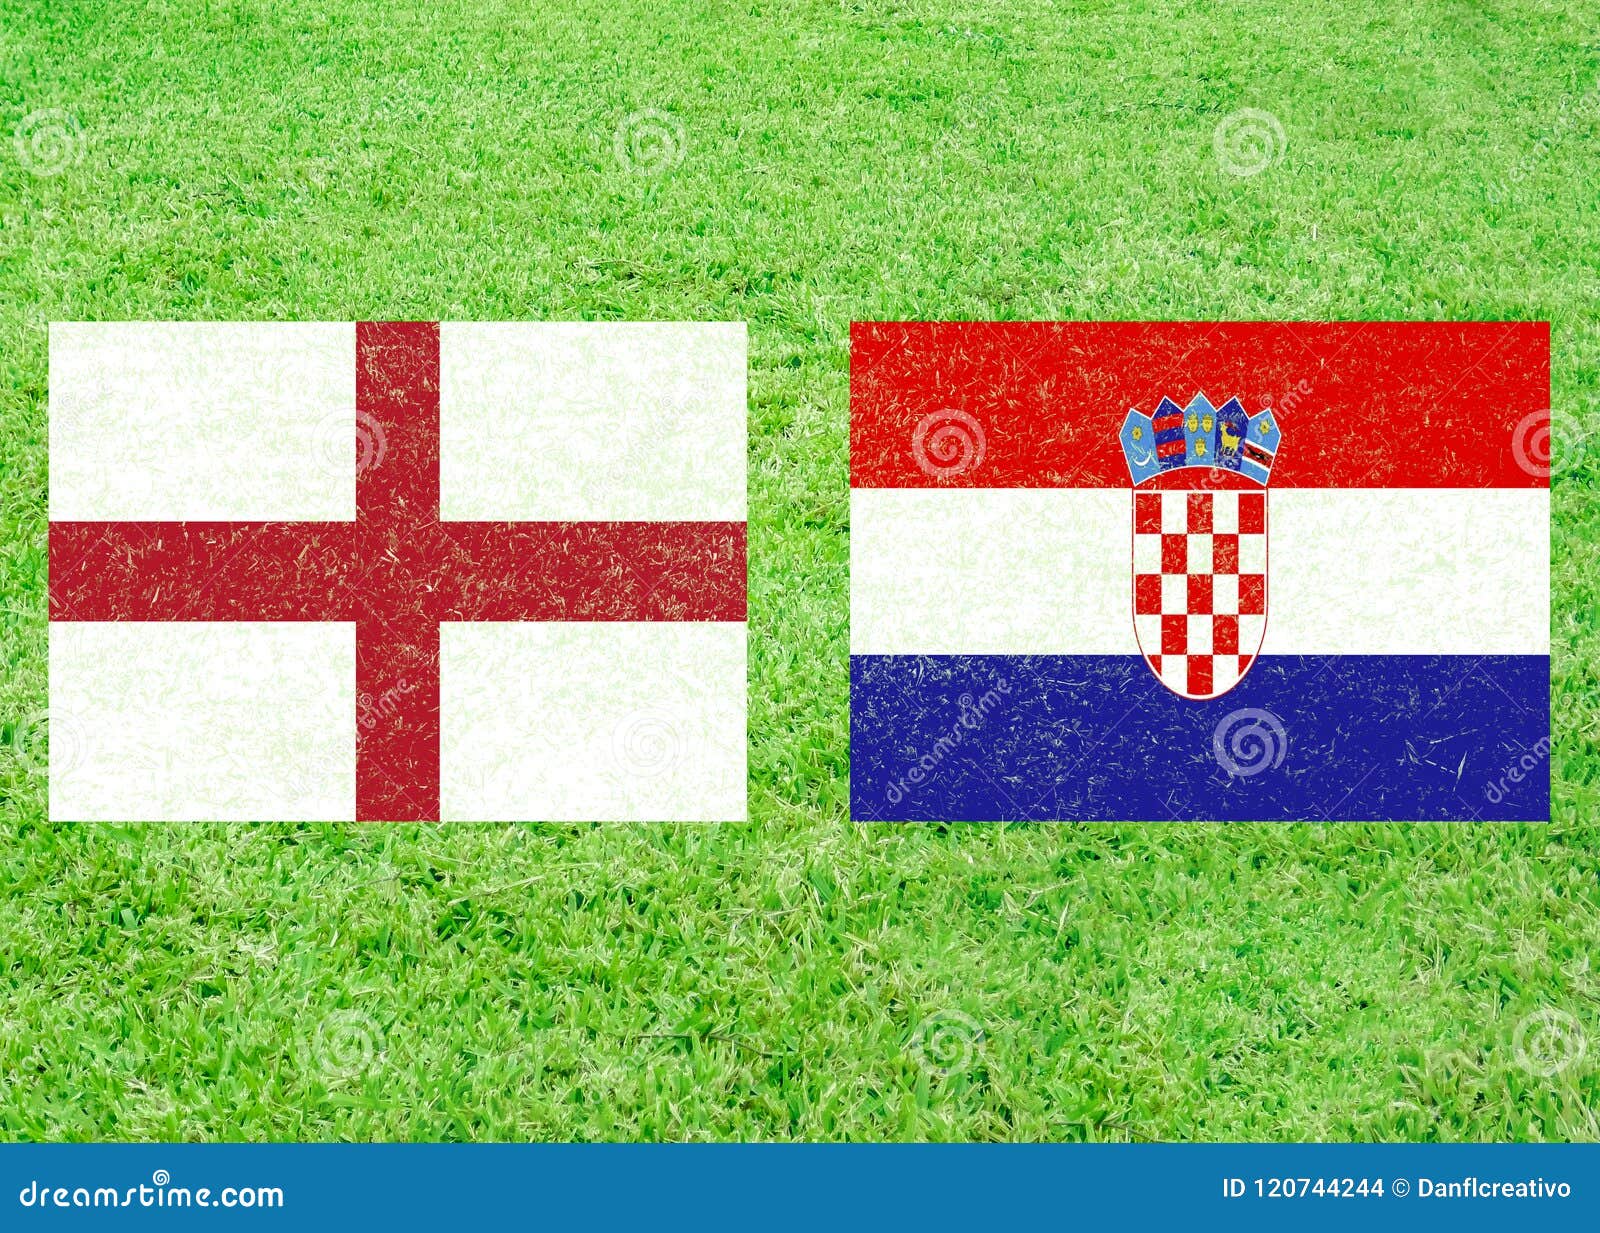 England vs croatia